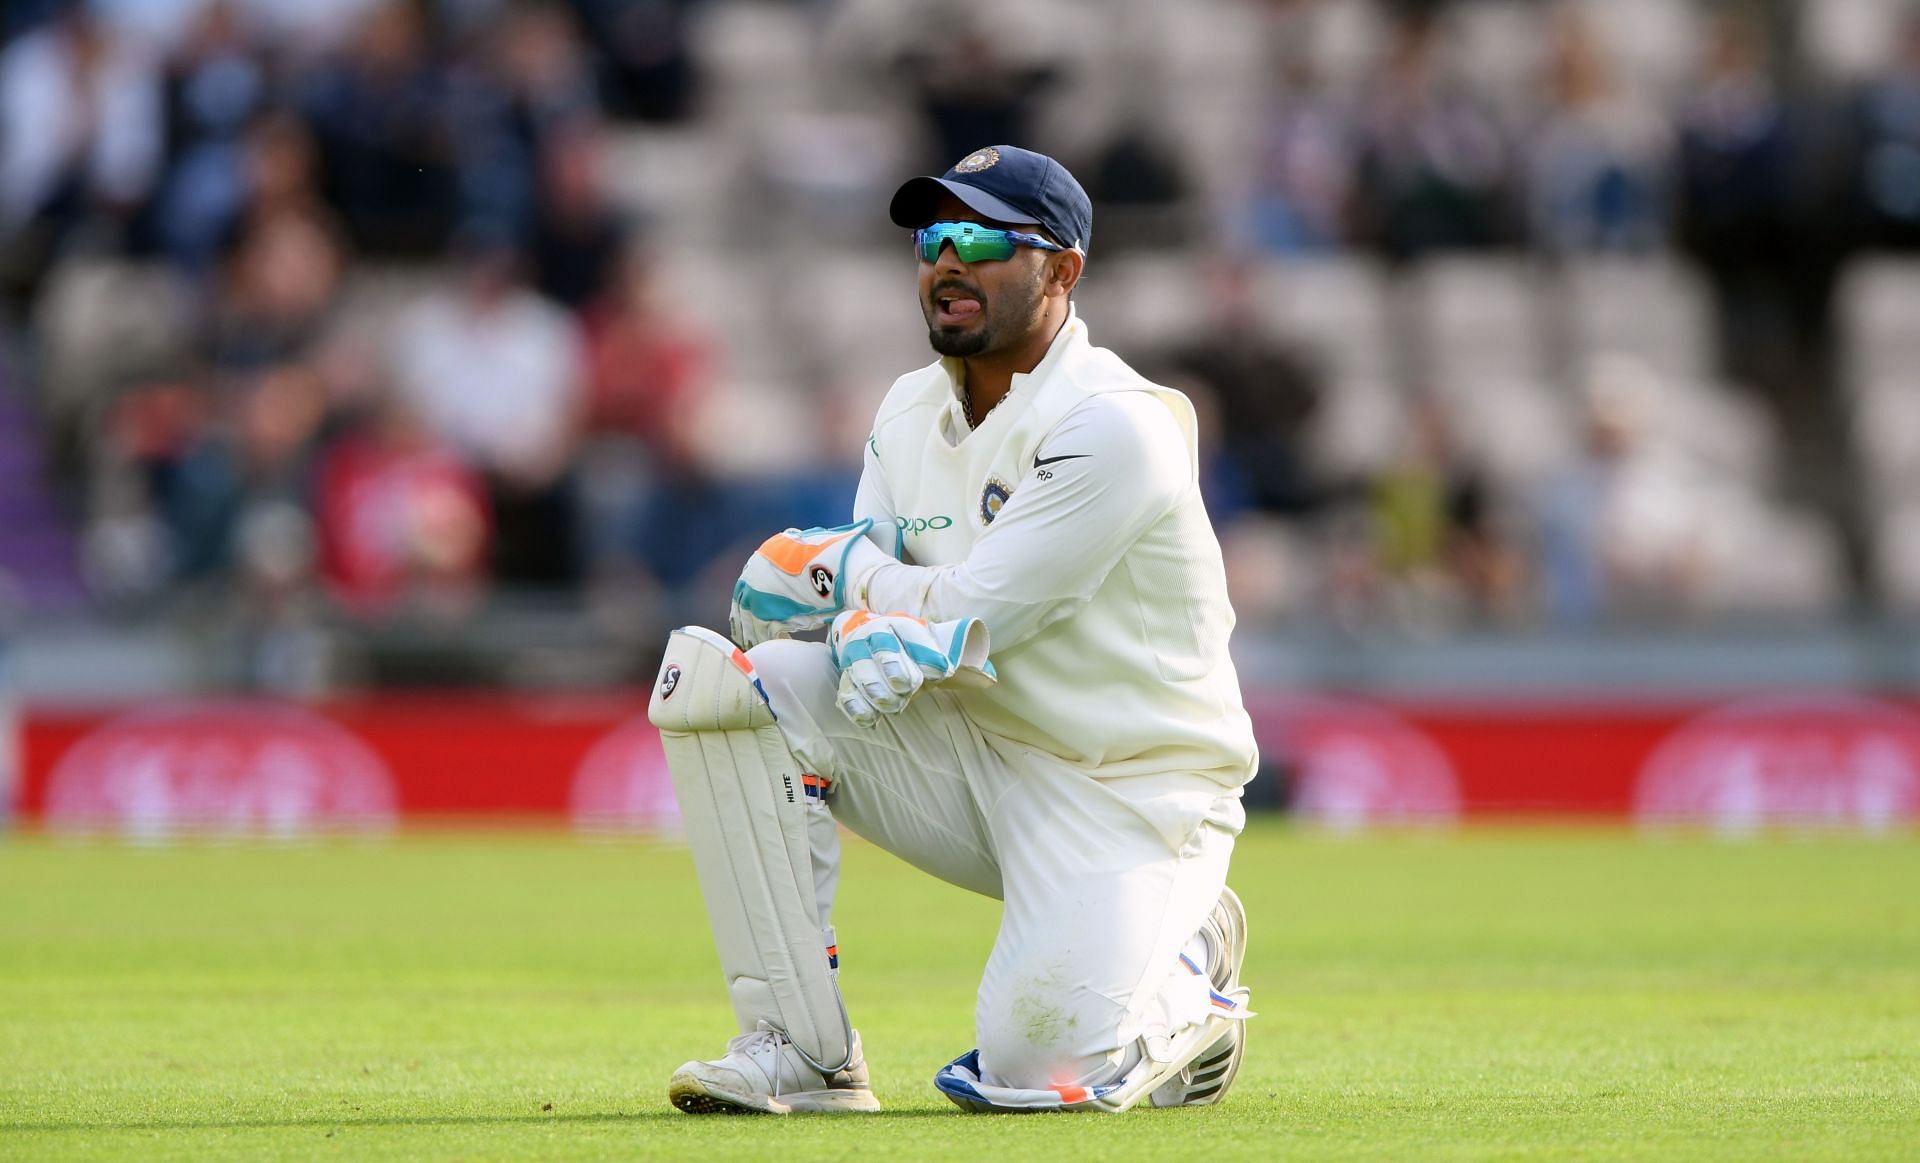 Rishabh Pant has hit 44 sixes so far in his Test career